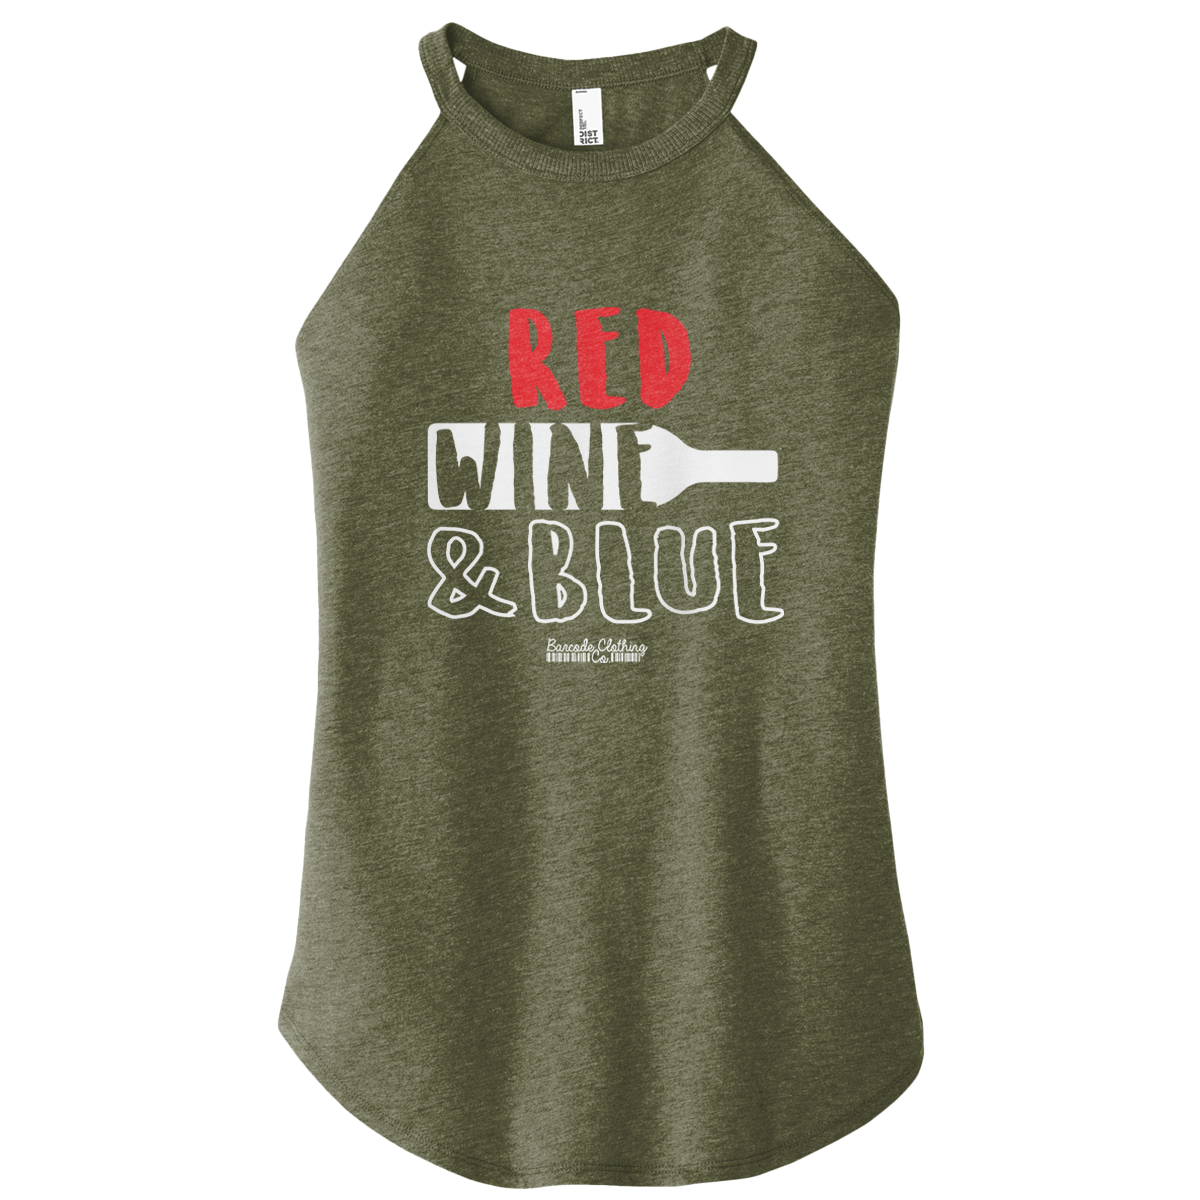 Red Wine & Blue Color Rocker Tank